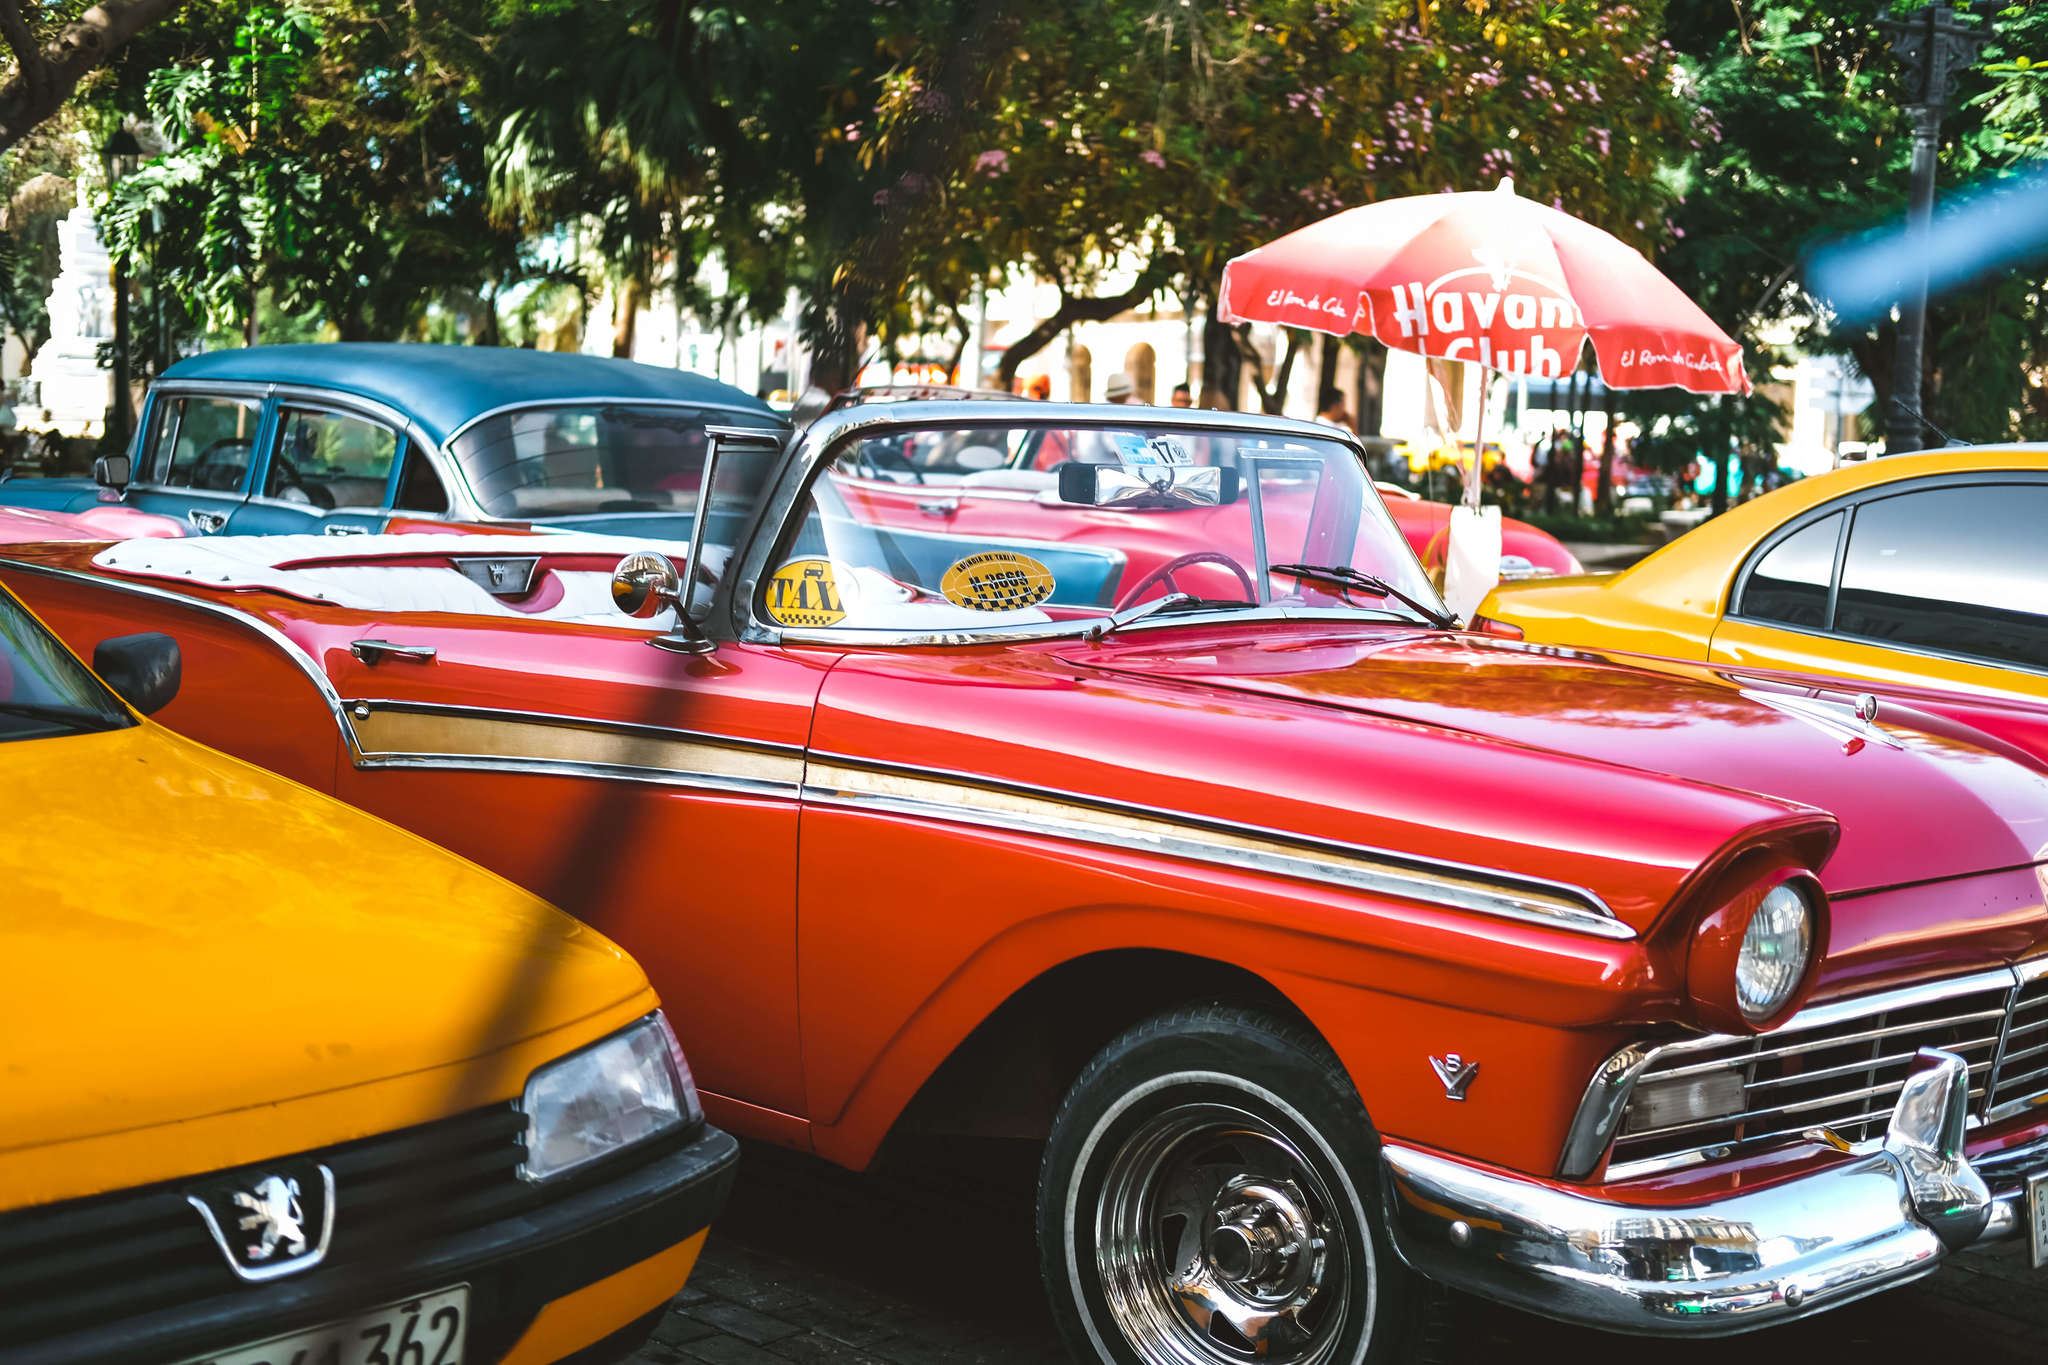 cars in Havana, Cuba